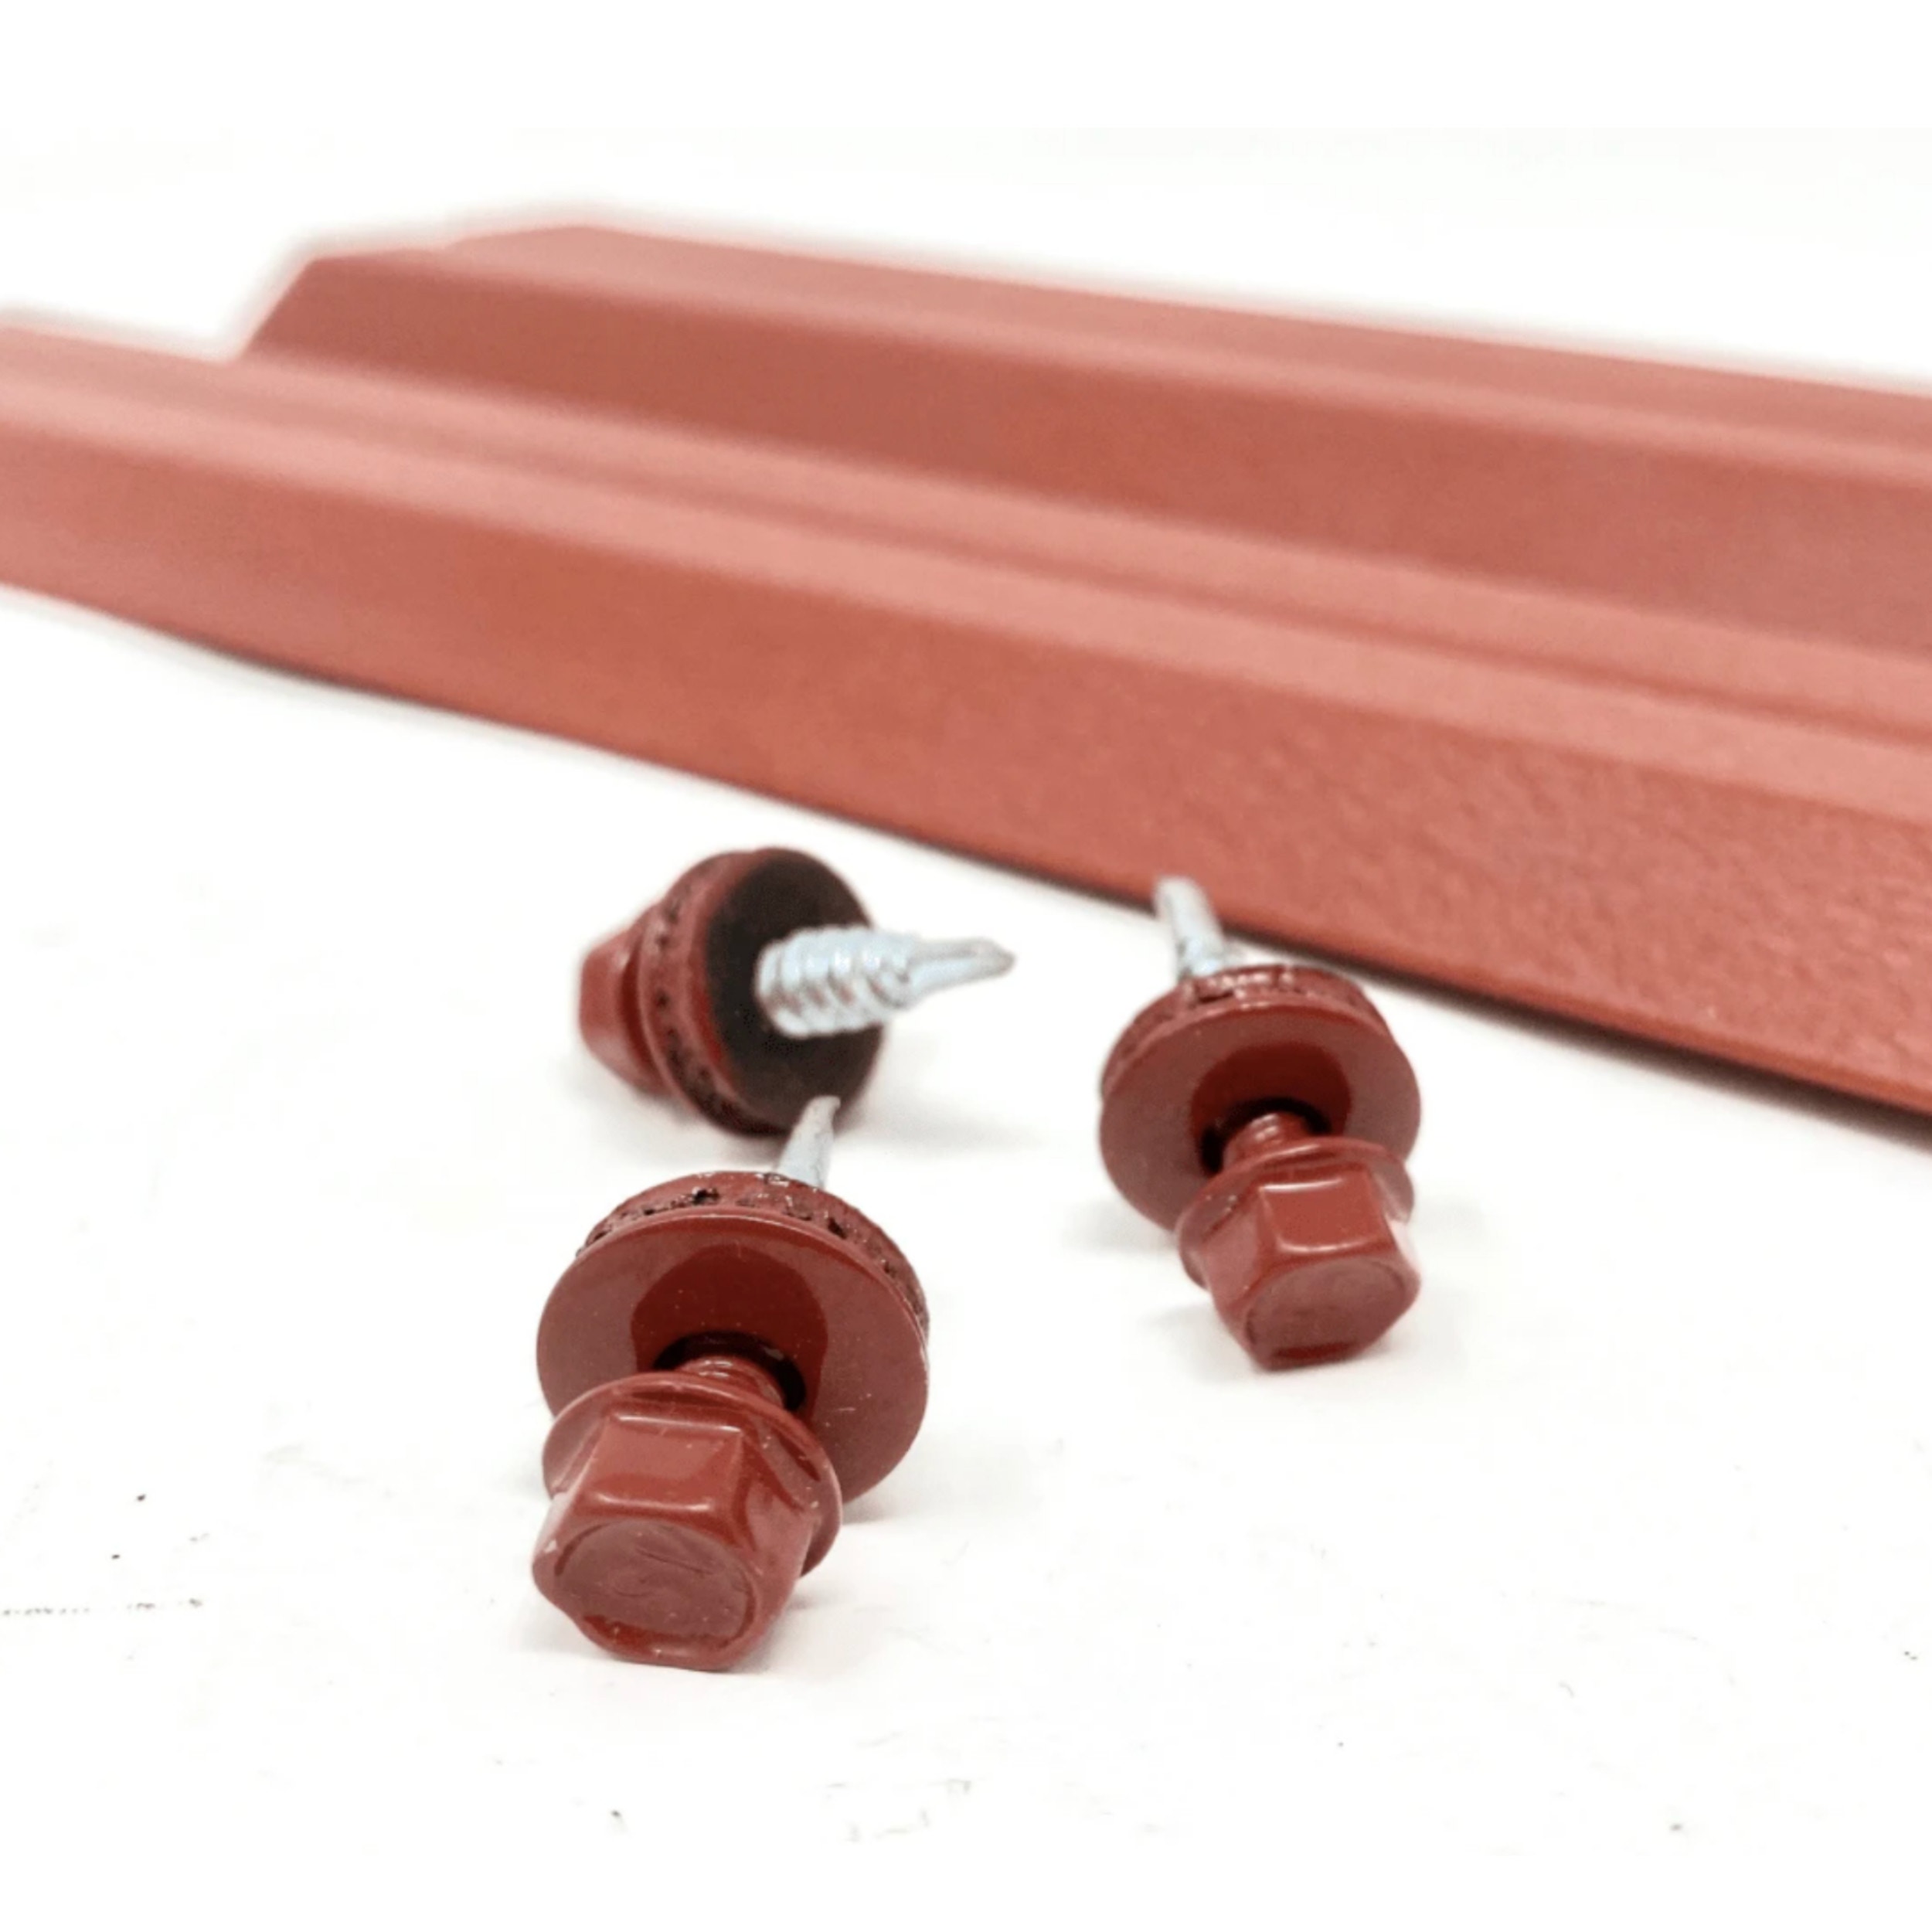 Sipca metalica cutata pentru gard, rosu / RAL 3011, 1300 x 115 x 0.45 mm, set 25 bucati + 50 bucati surub autoforant